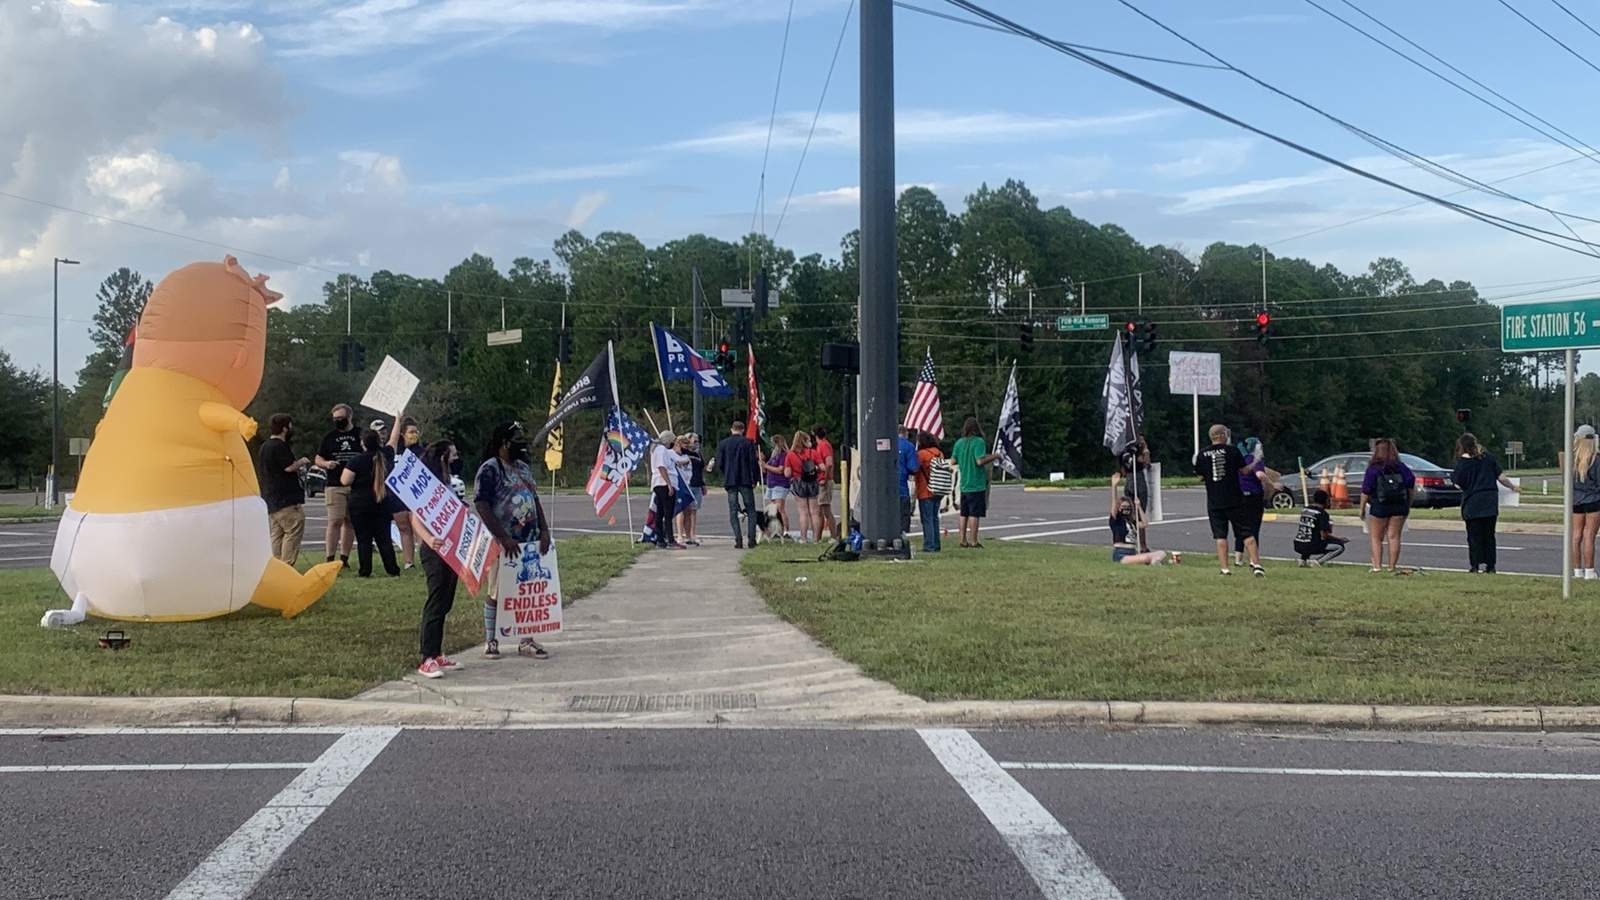 Demonstrators hoped to ‘send a message’ during Trump’s Jacksonville visit